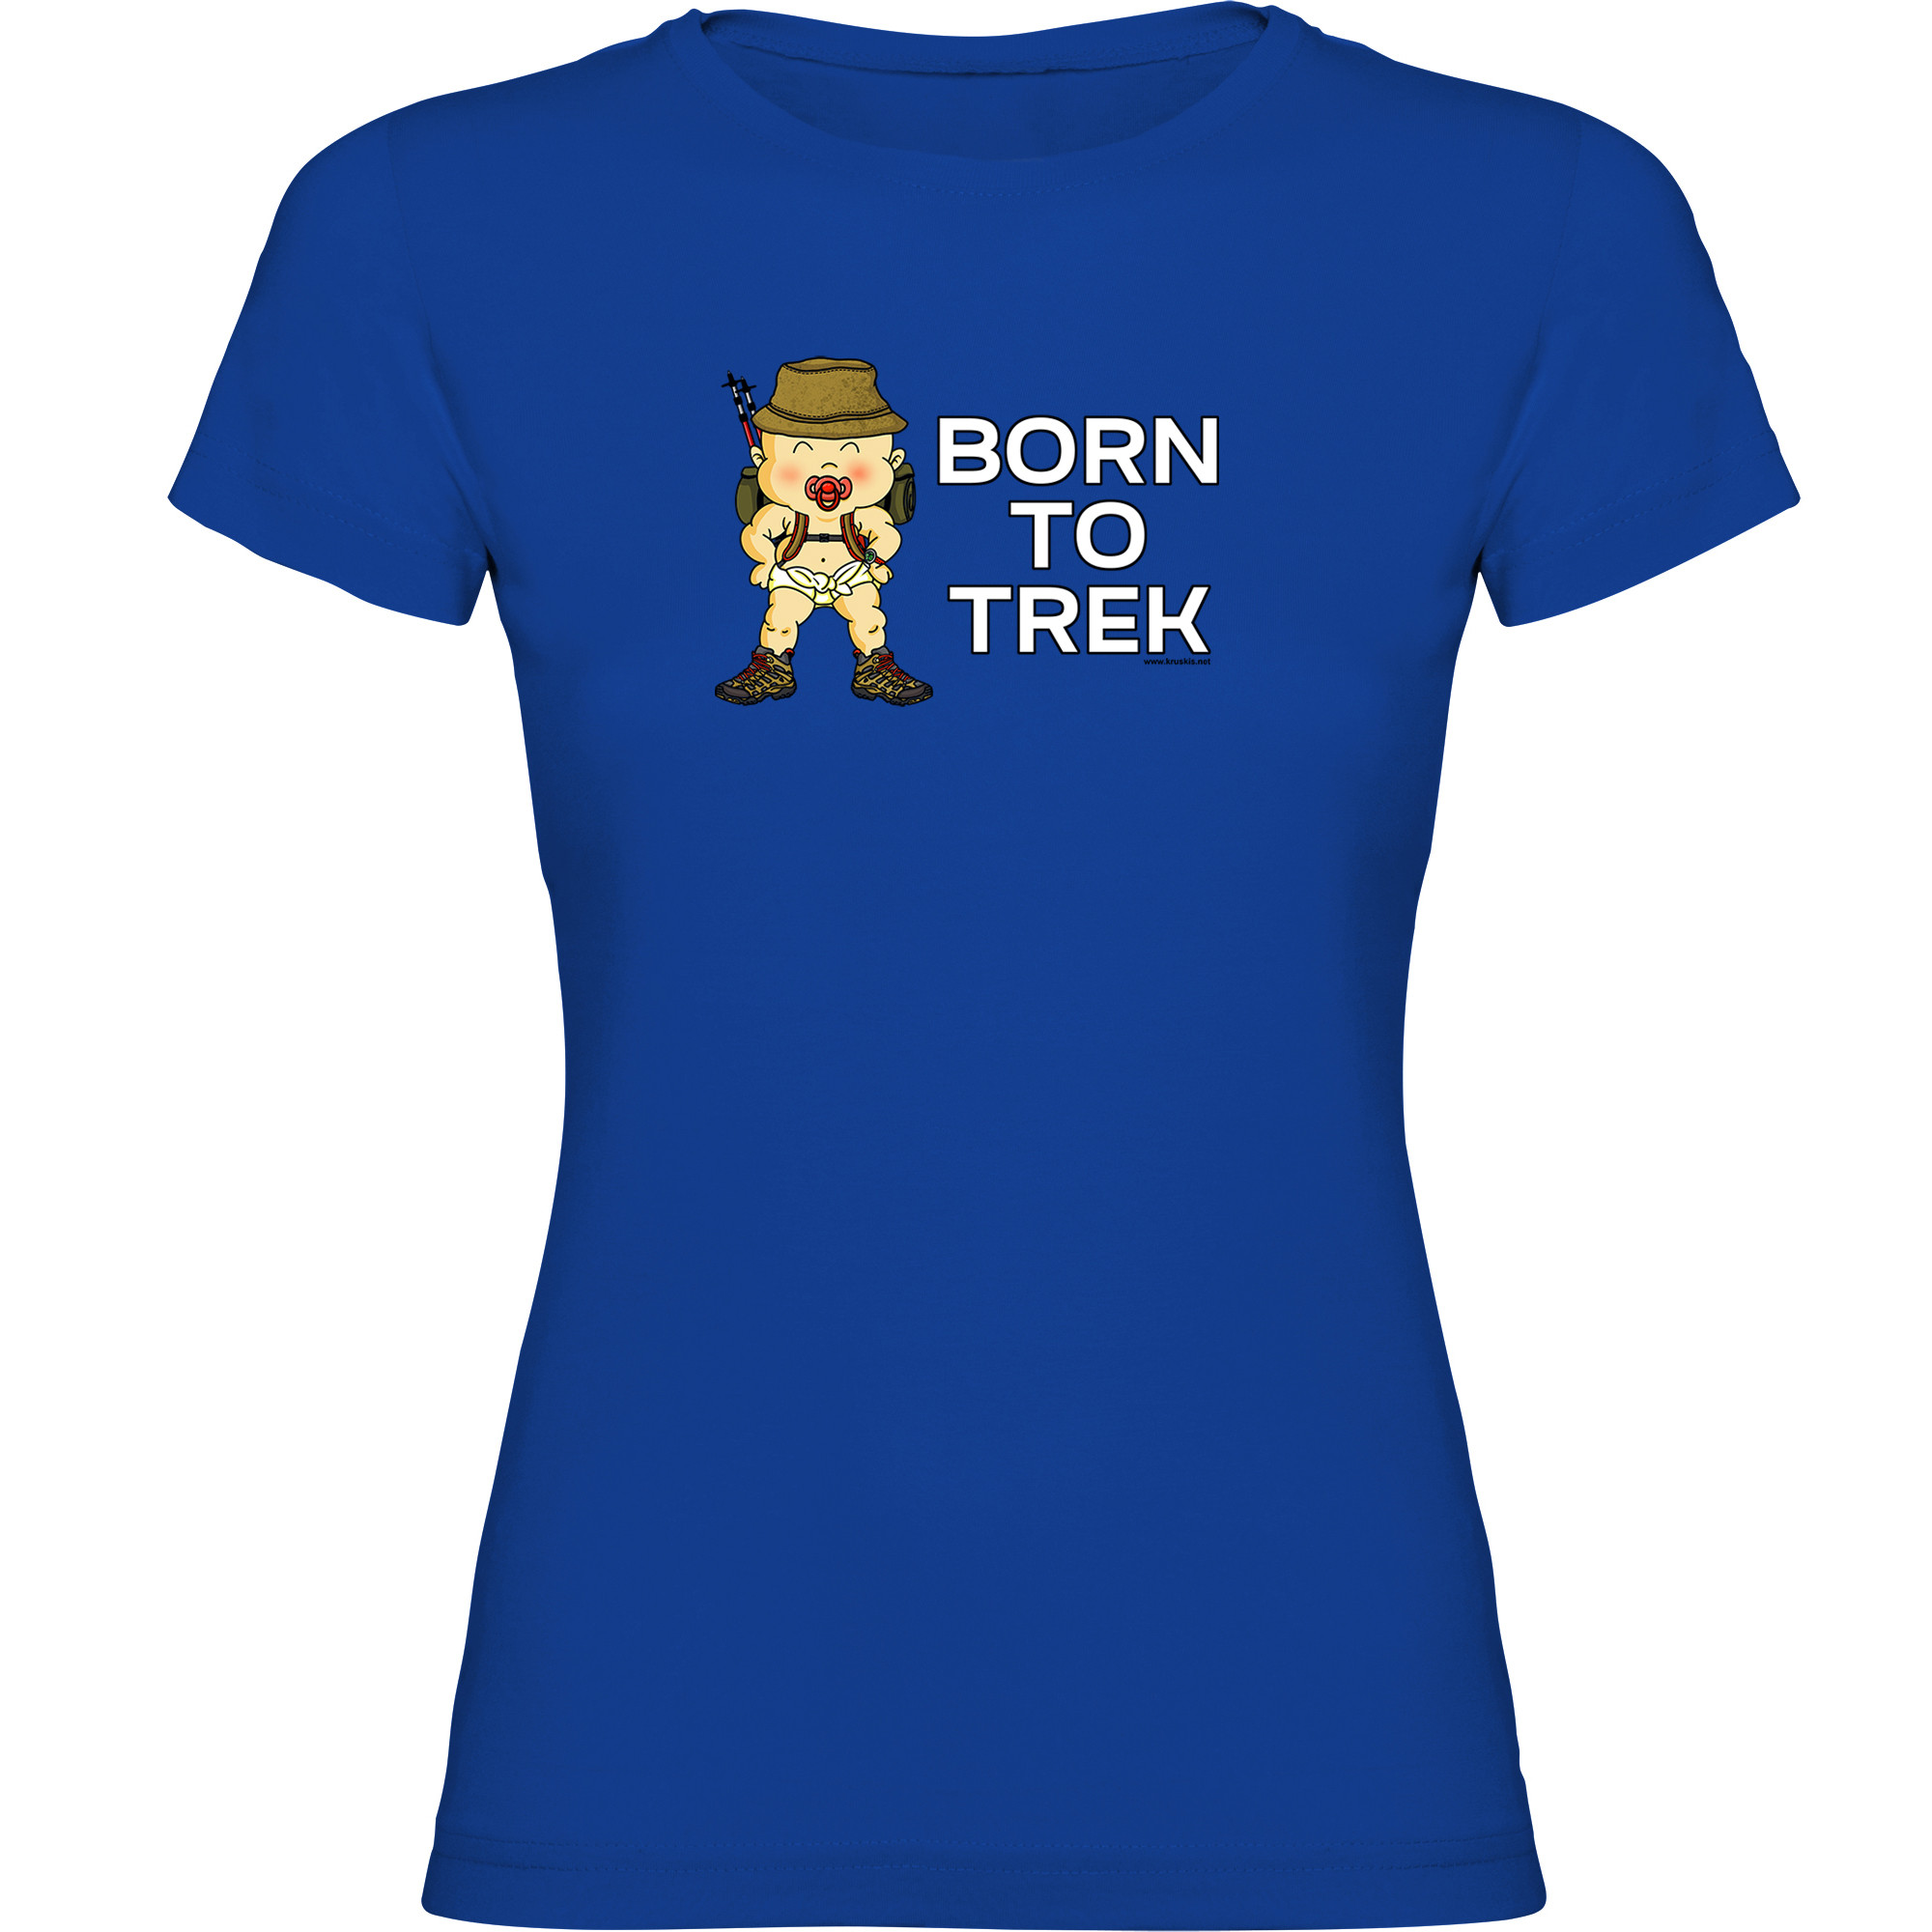 T Shirt Trekking Born to Trek Manica Corta Donna